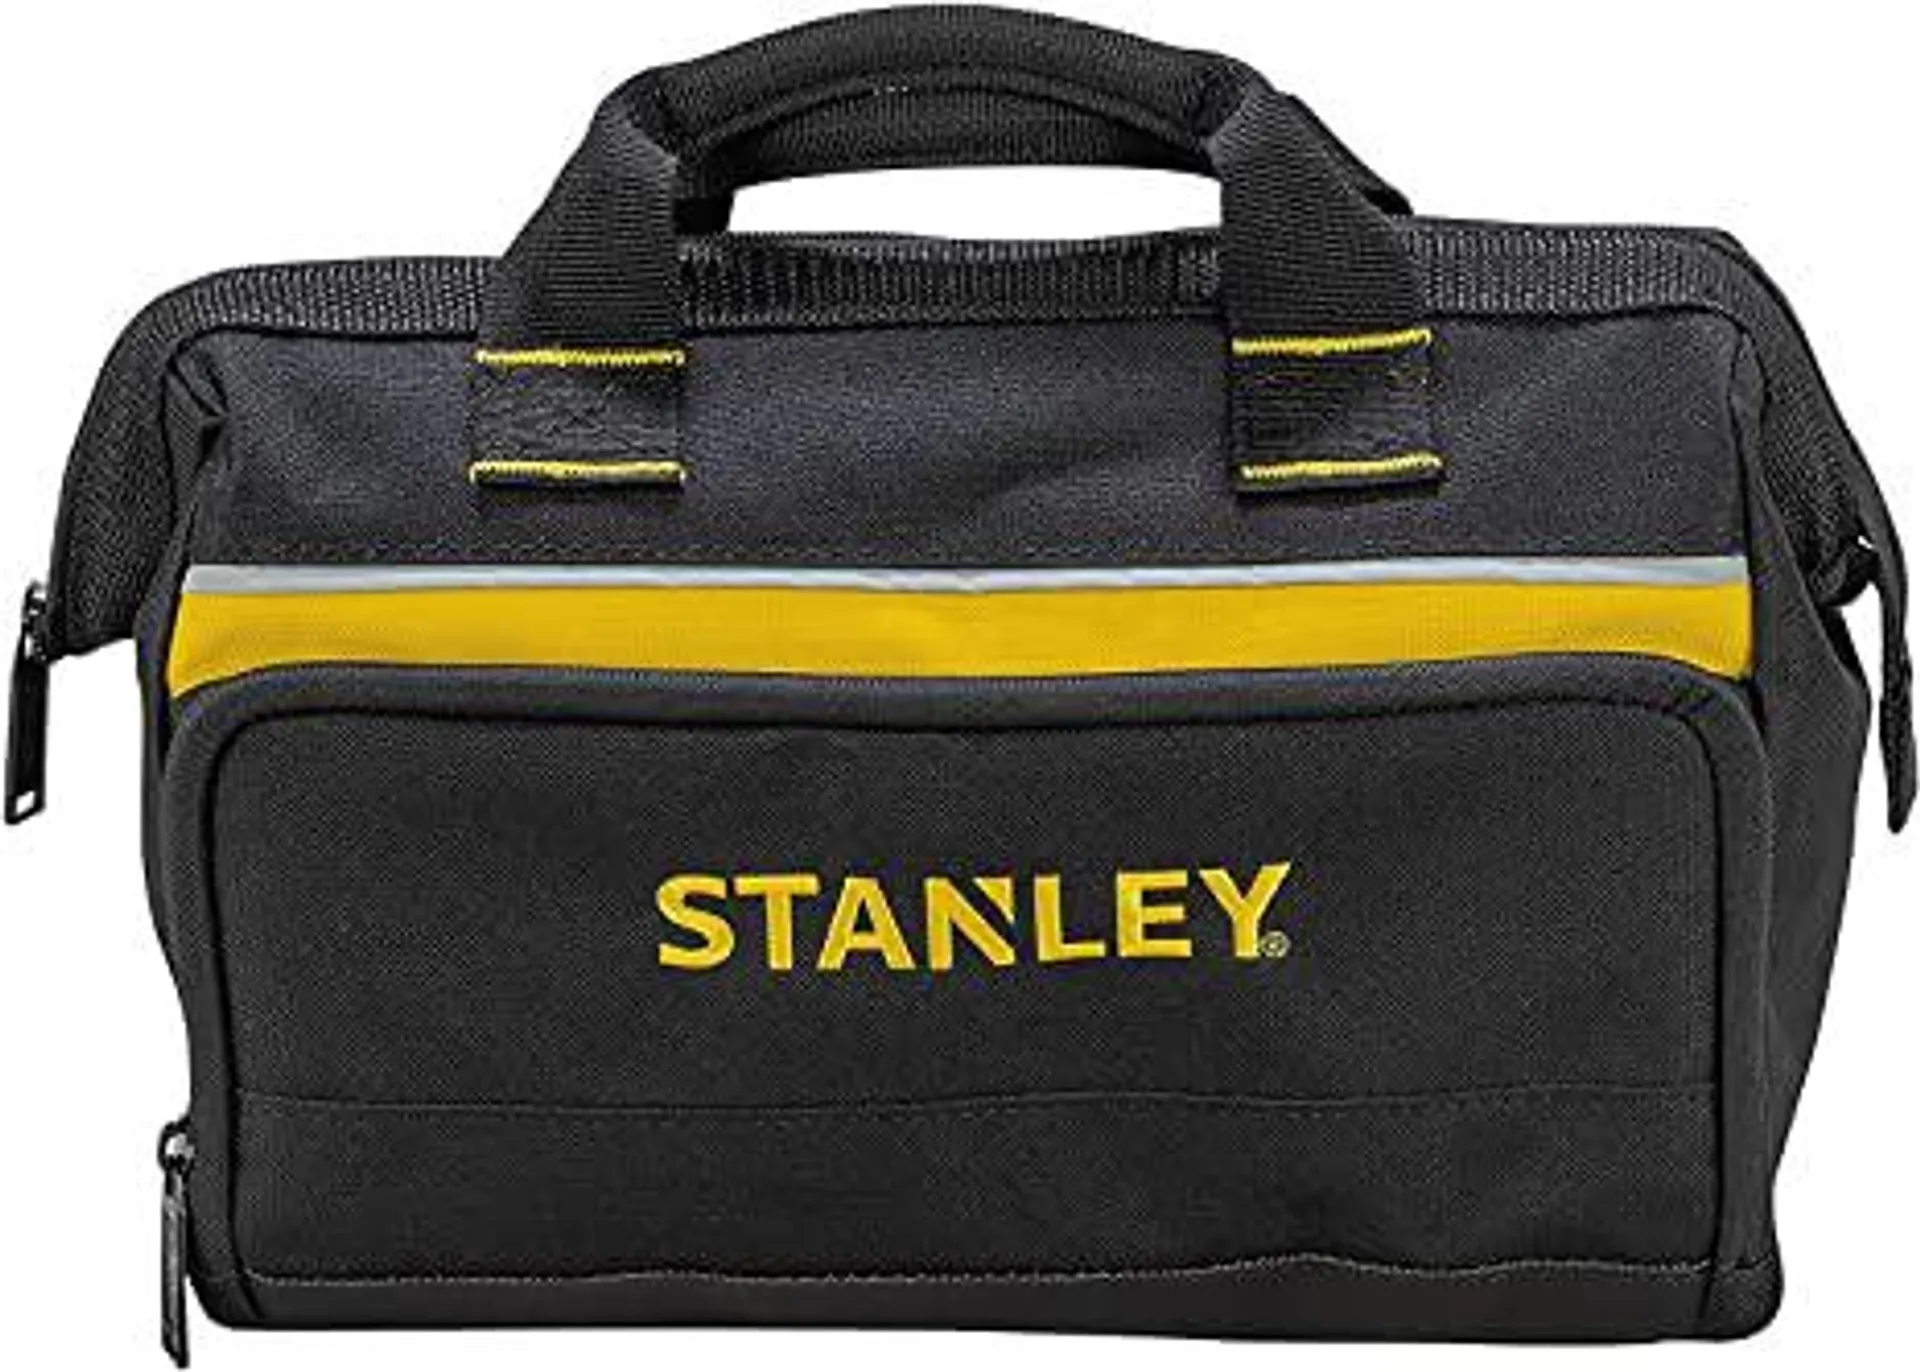 STANLEY - 1-93-330 Tool bag, 30 x 25 x 13 cm, assorted models, (1 unit)